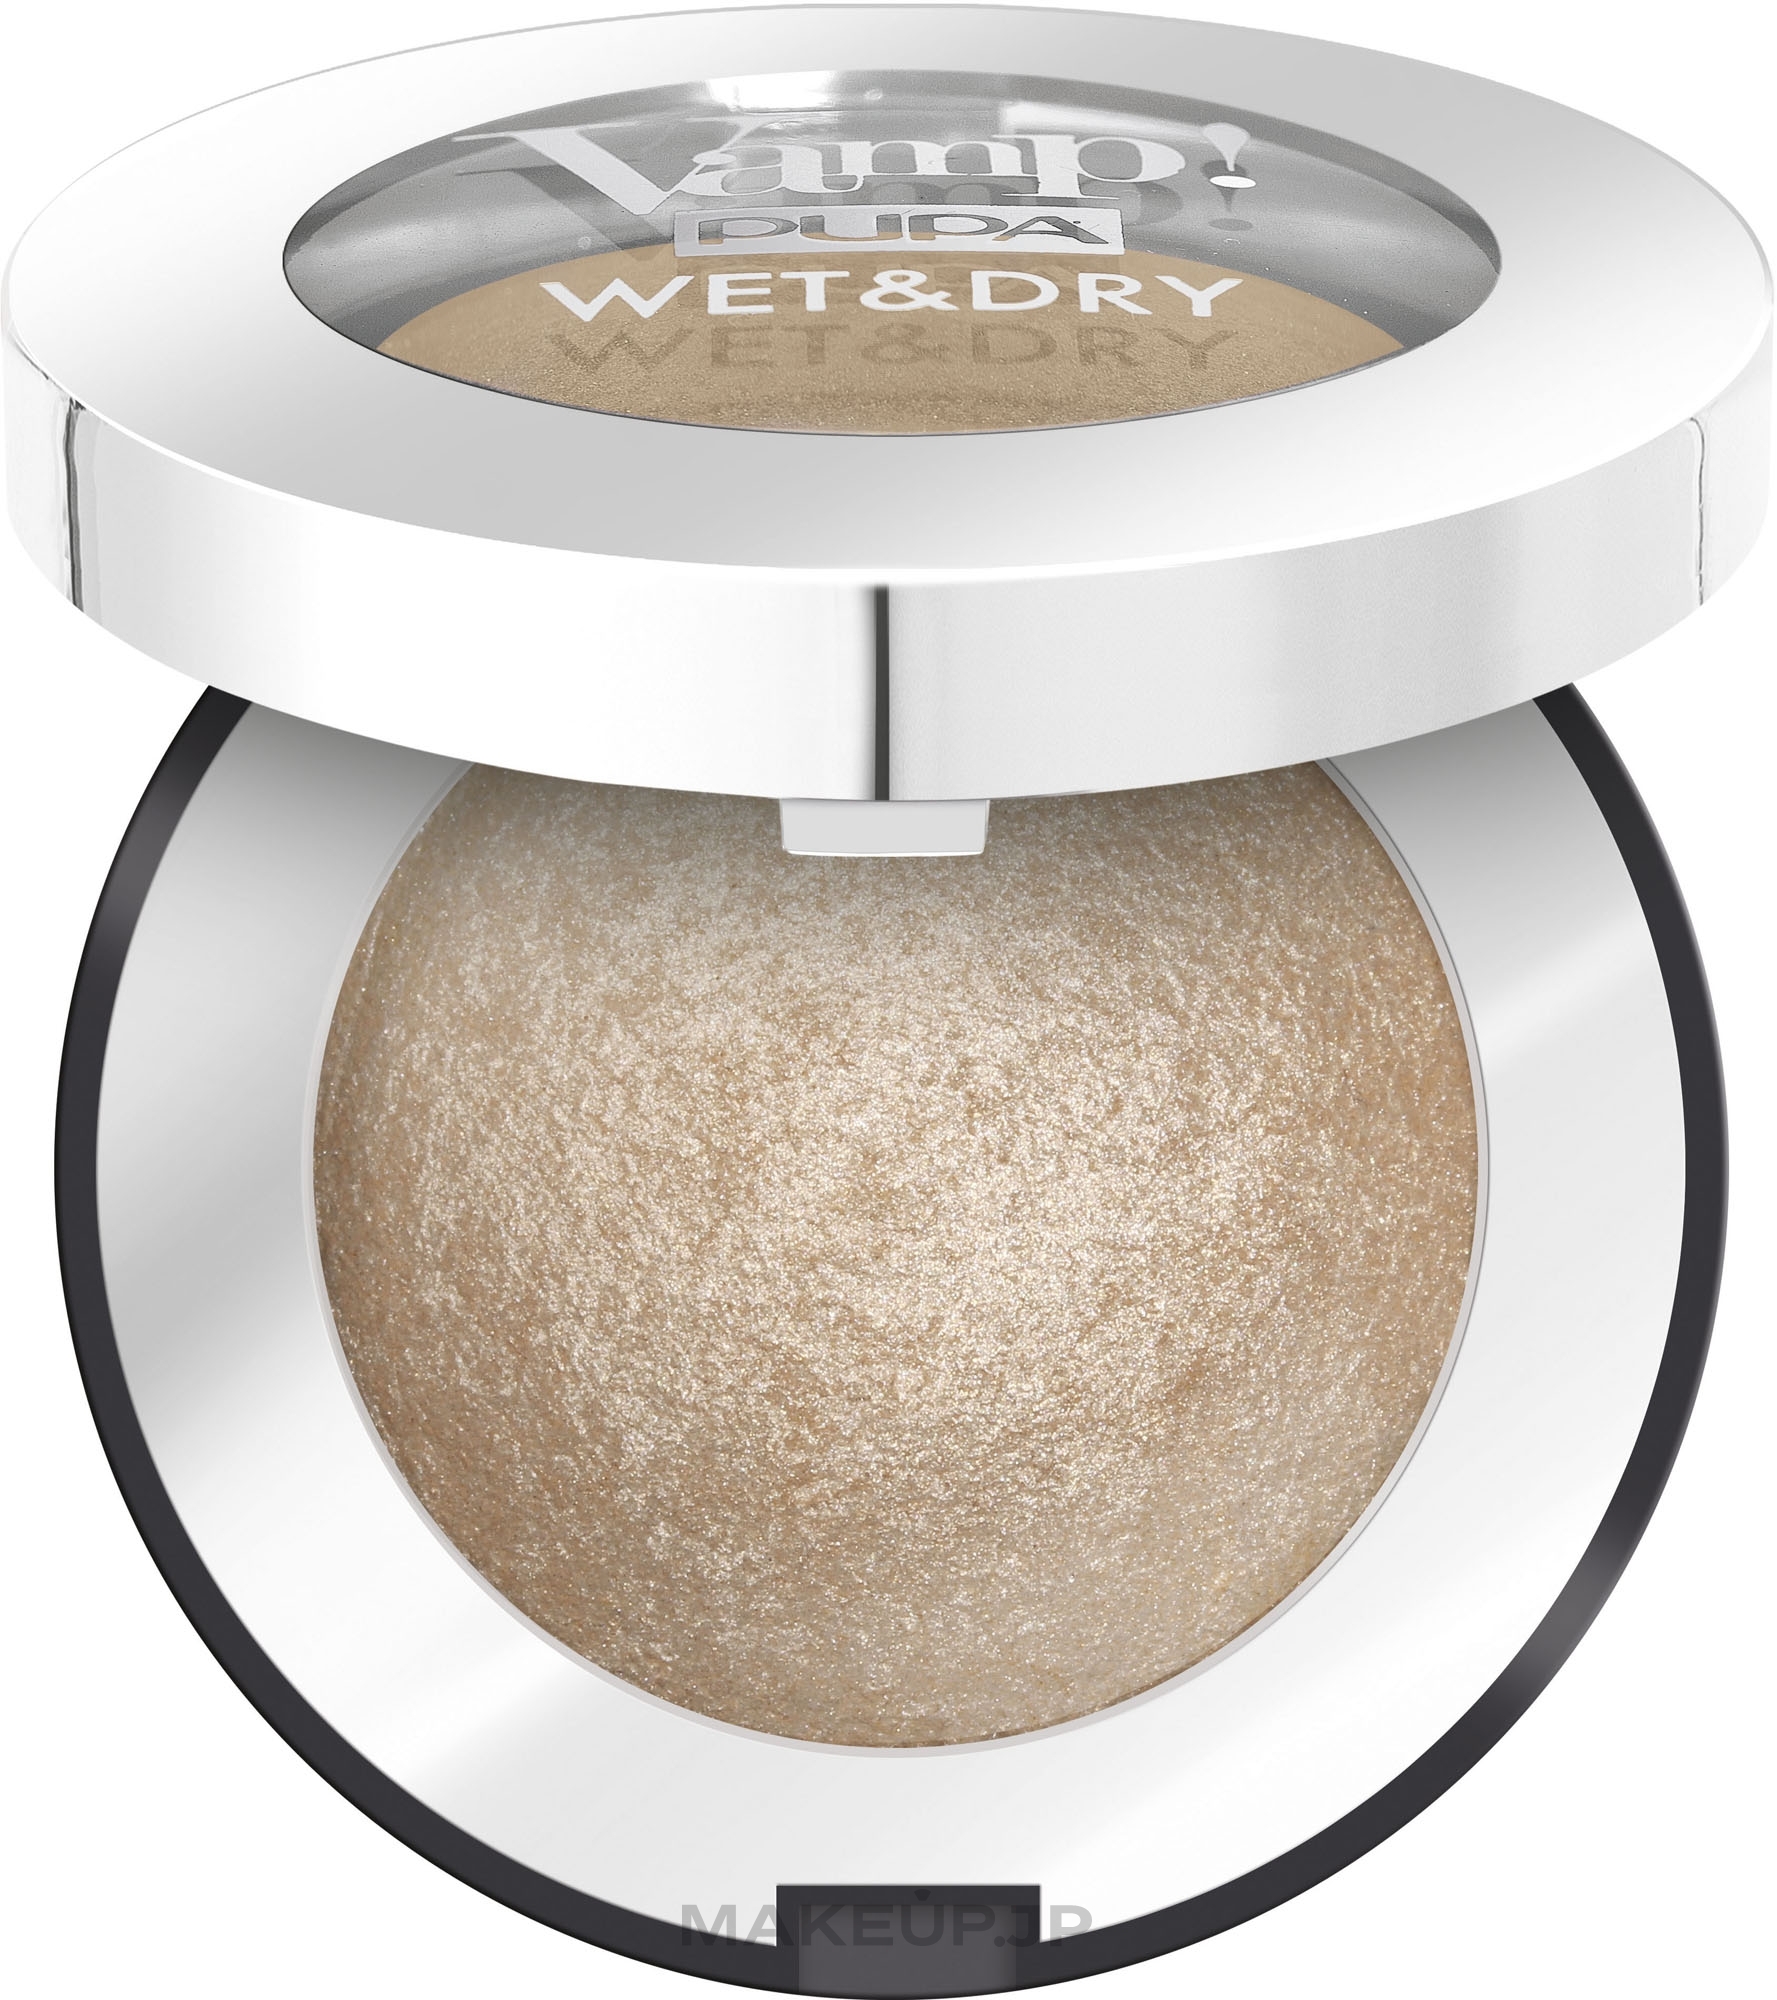 Baked Shimmer Eyeshadow - Pupa Vamp! Wet & Dry Eyeshadow  — photo 100 - Champagne Gold